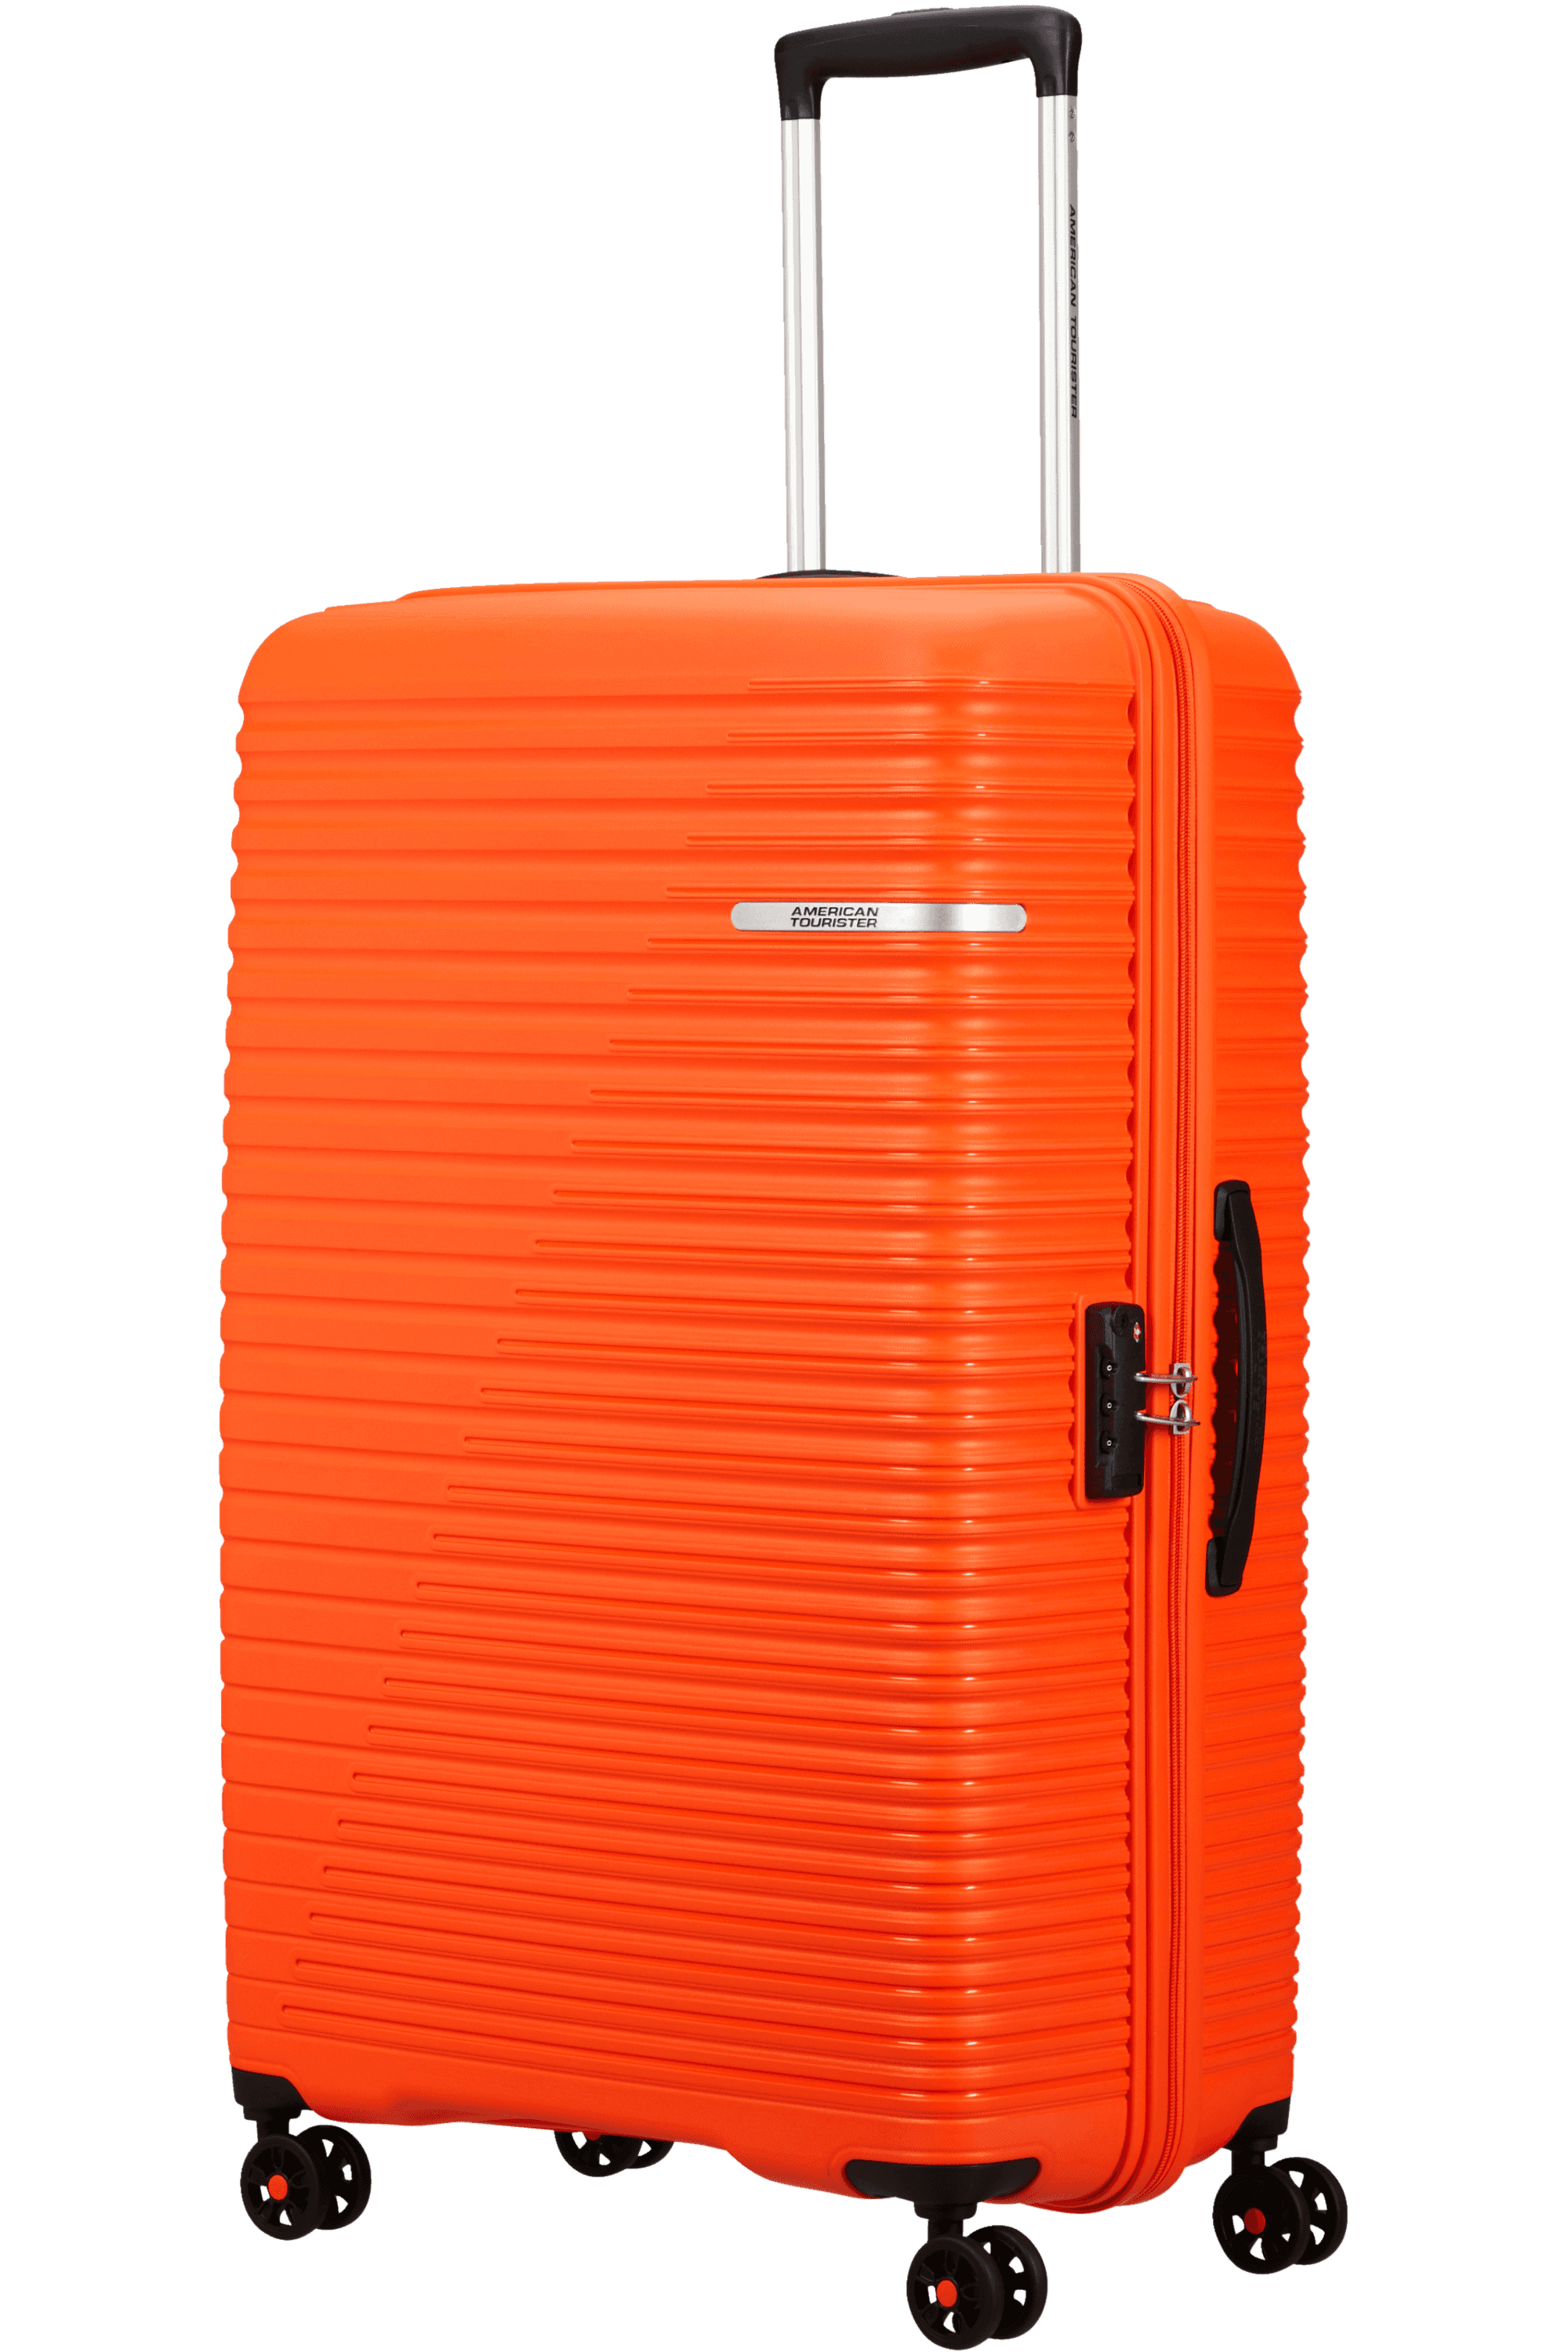 American Tourister Trolley Liftoff juicy orange 79cm